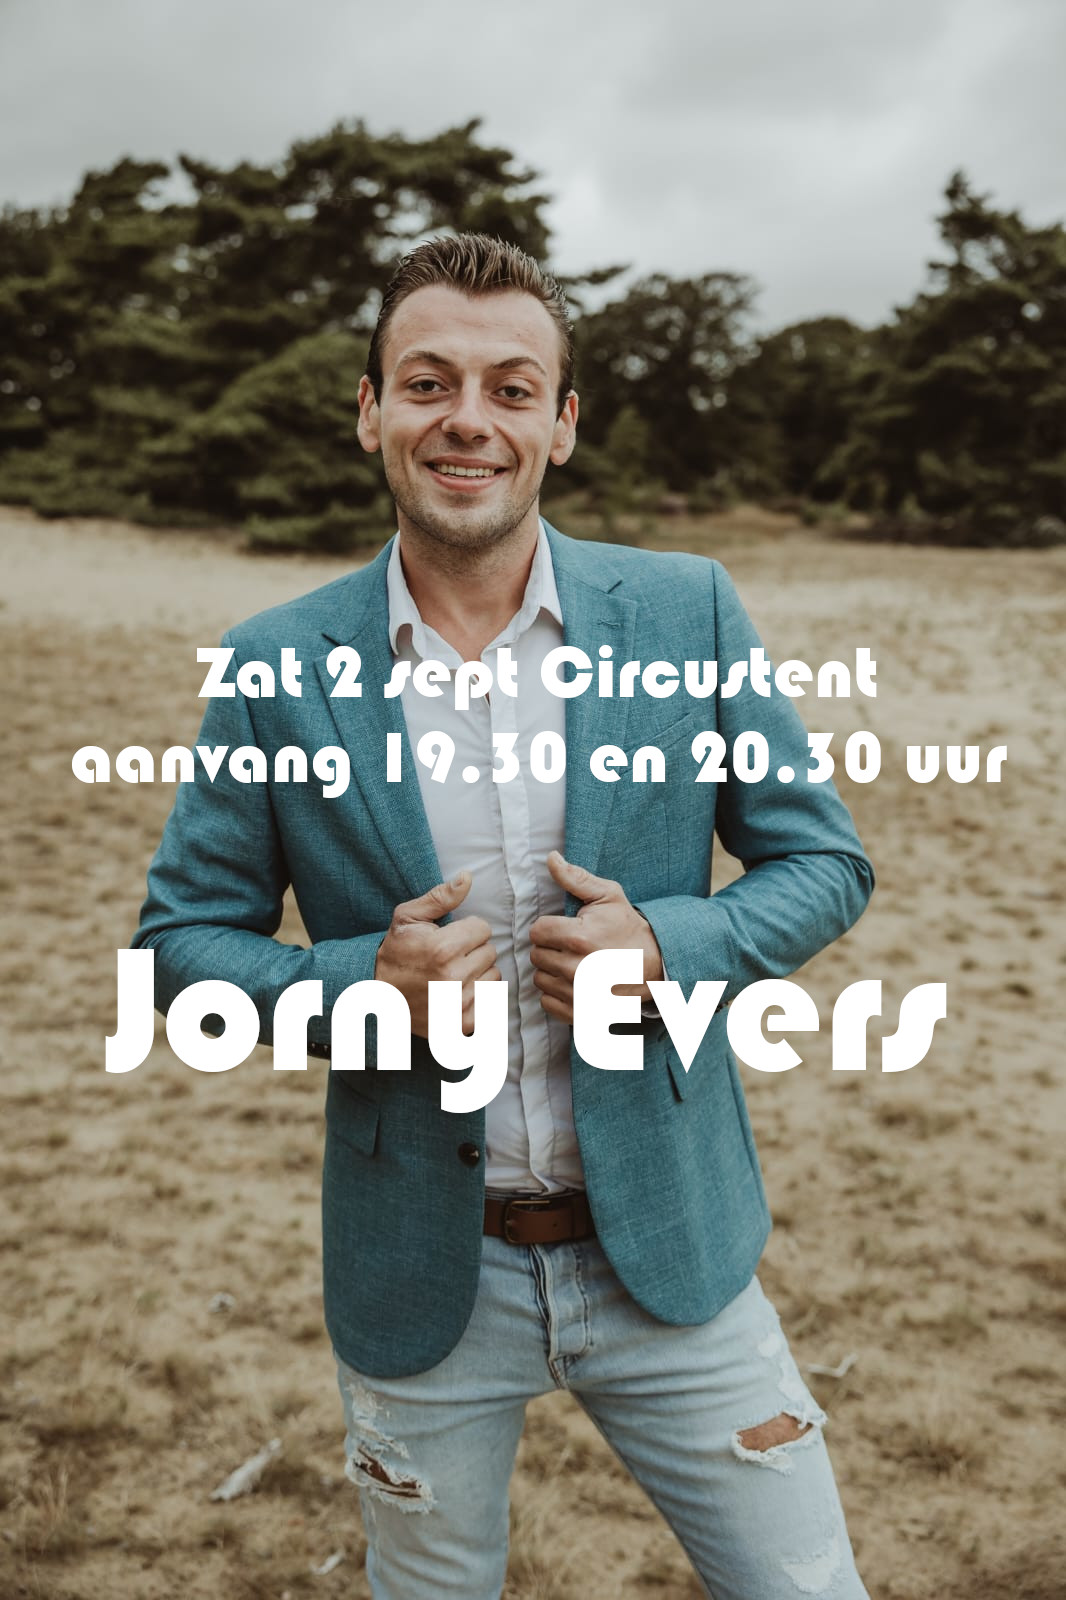 Jorny Evers